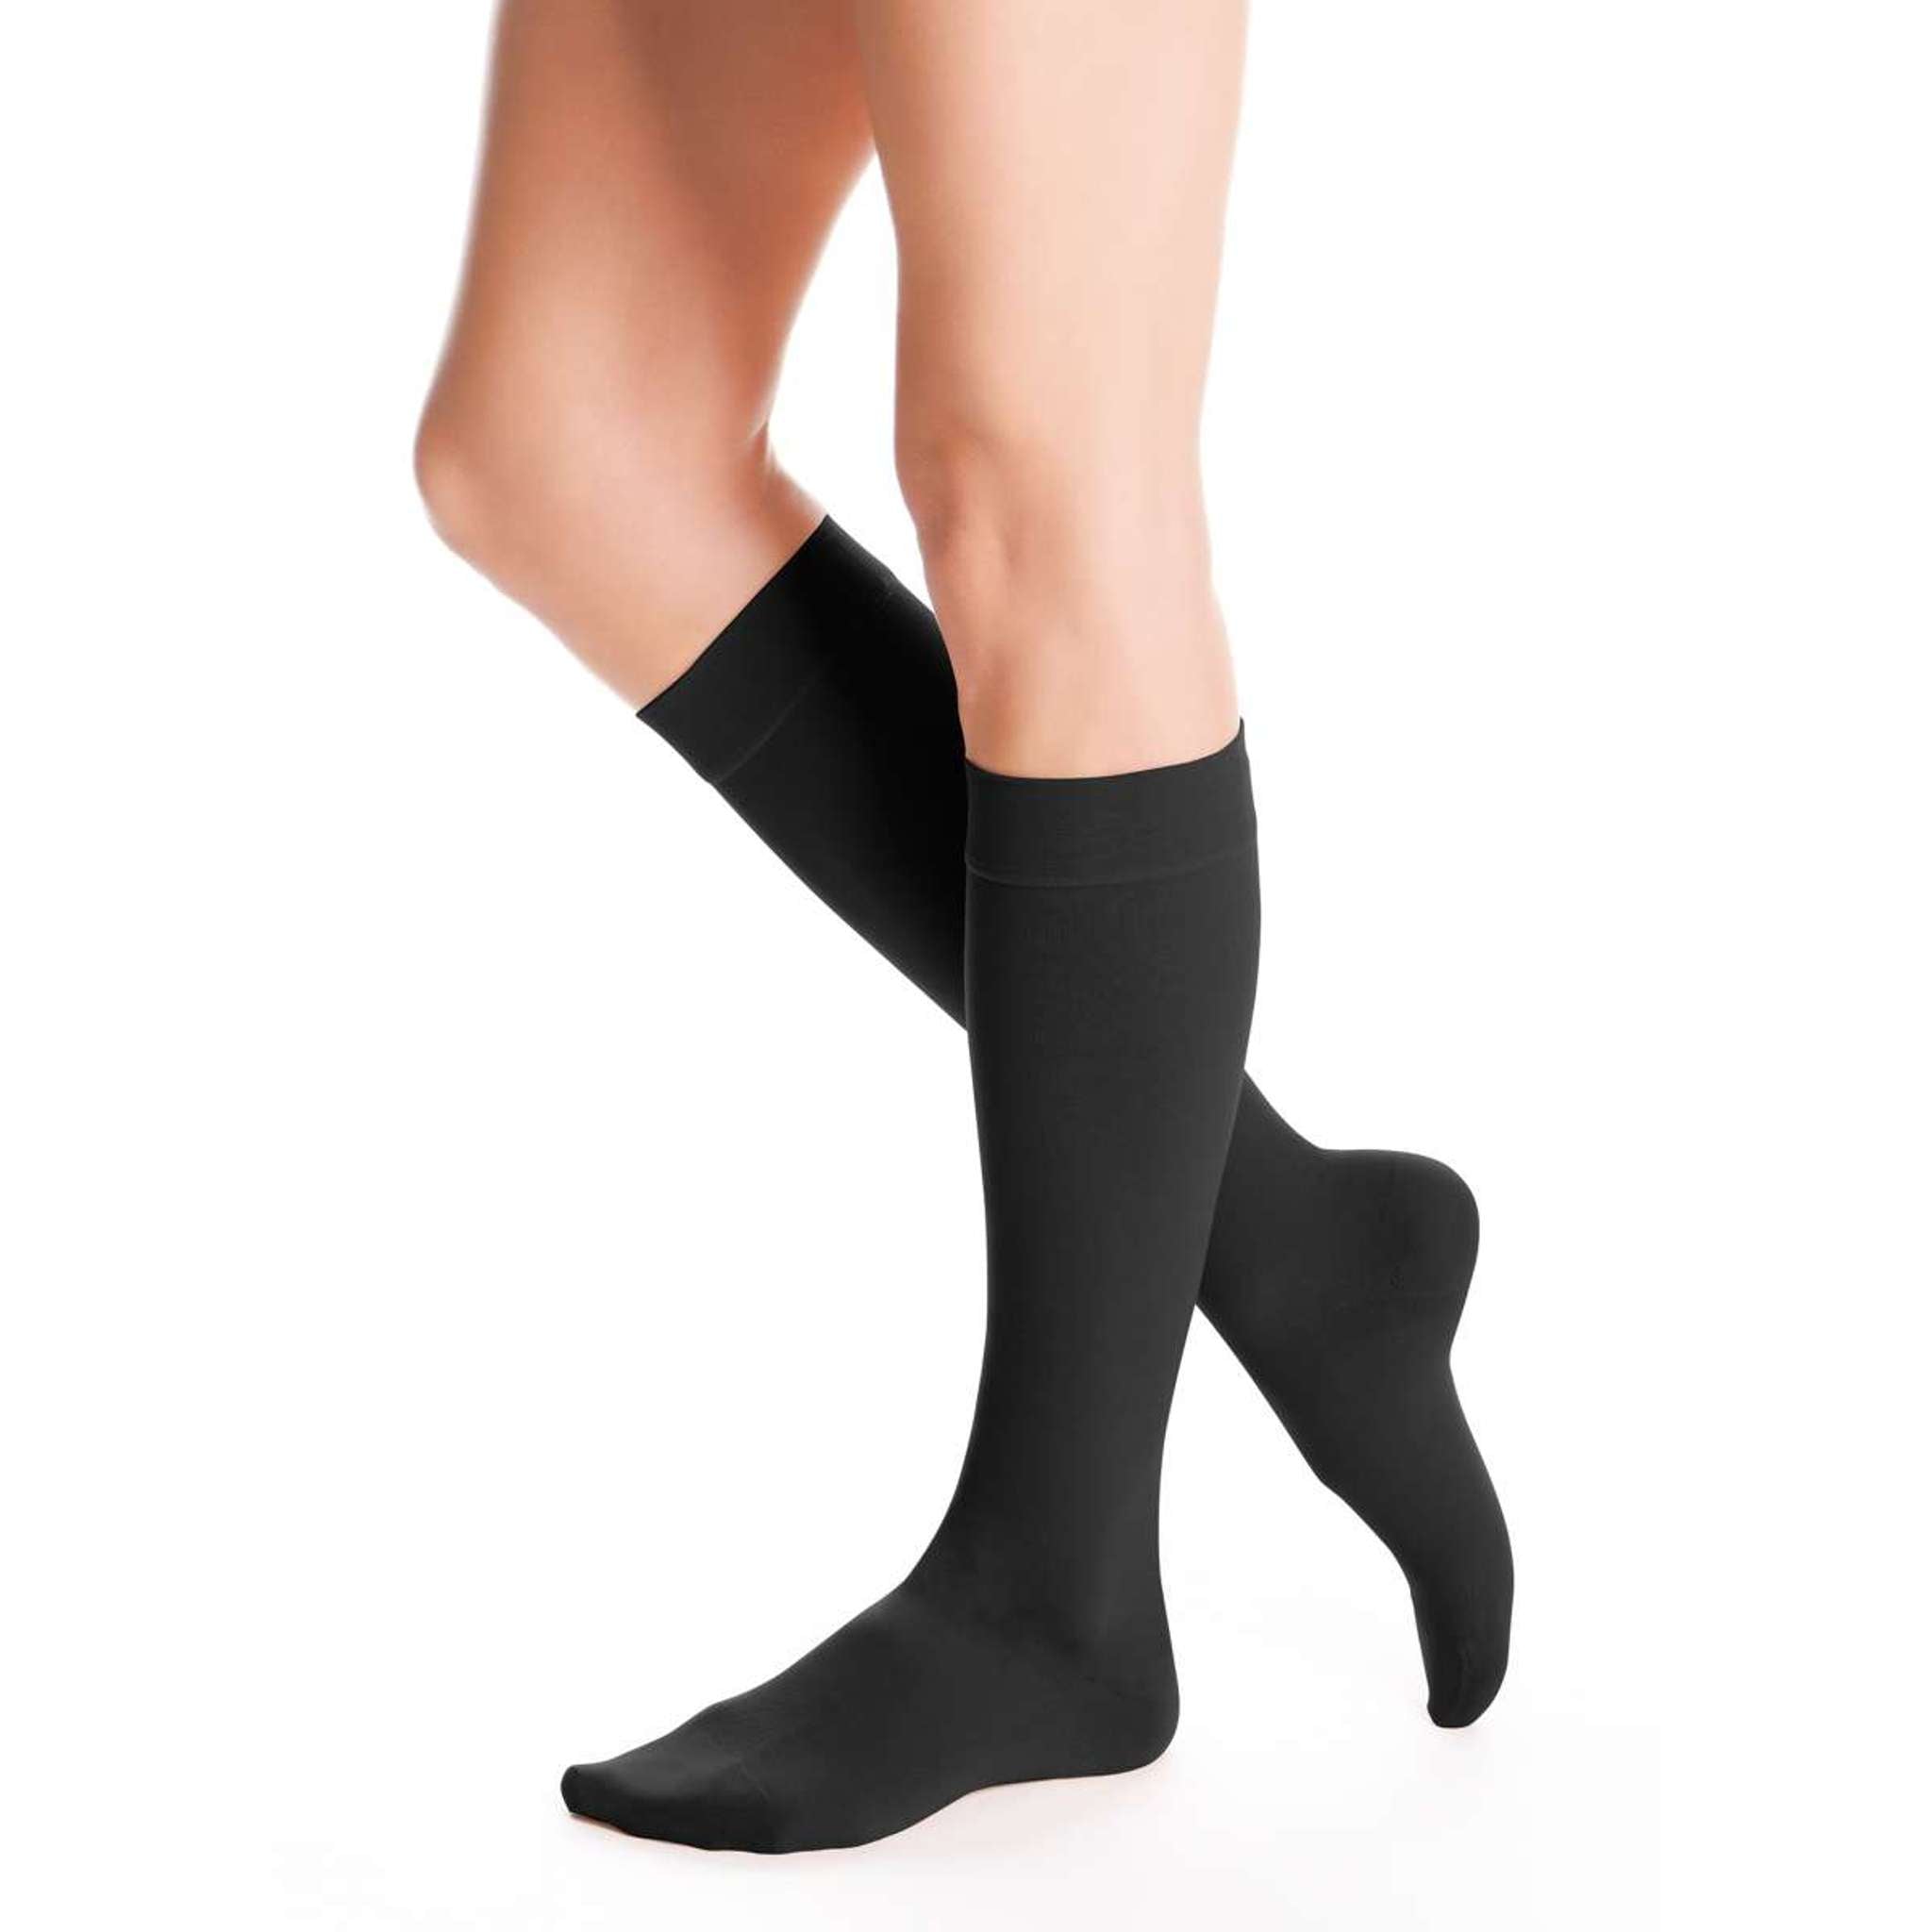 Compression Zipper Socks Leg Support - Black -Unisex Small